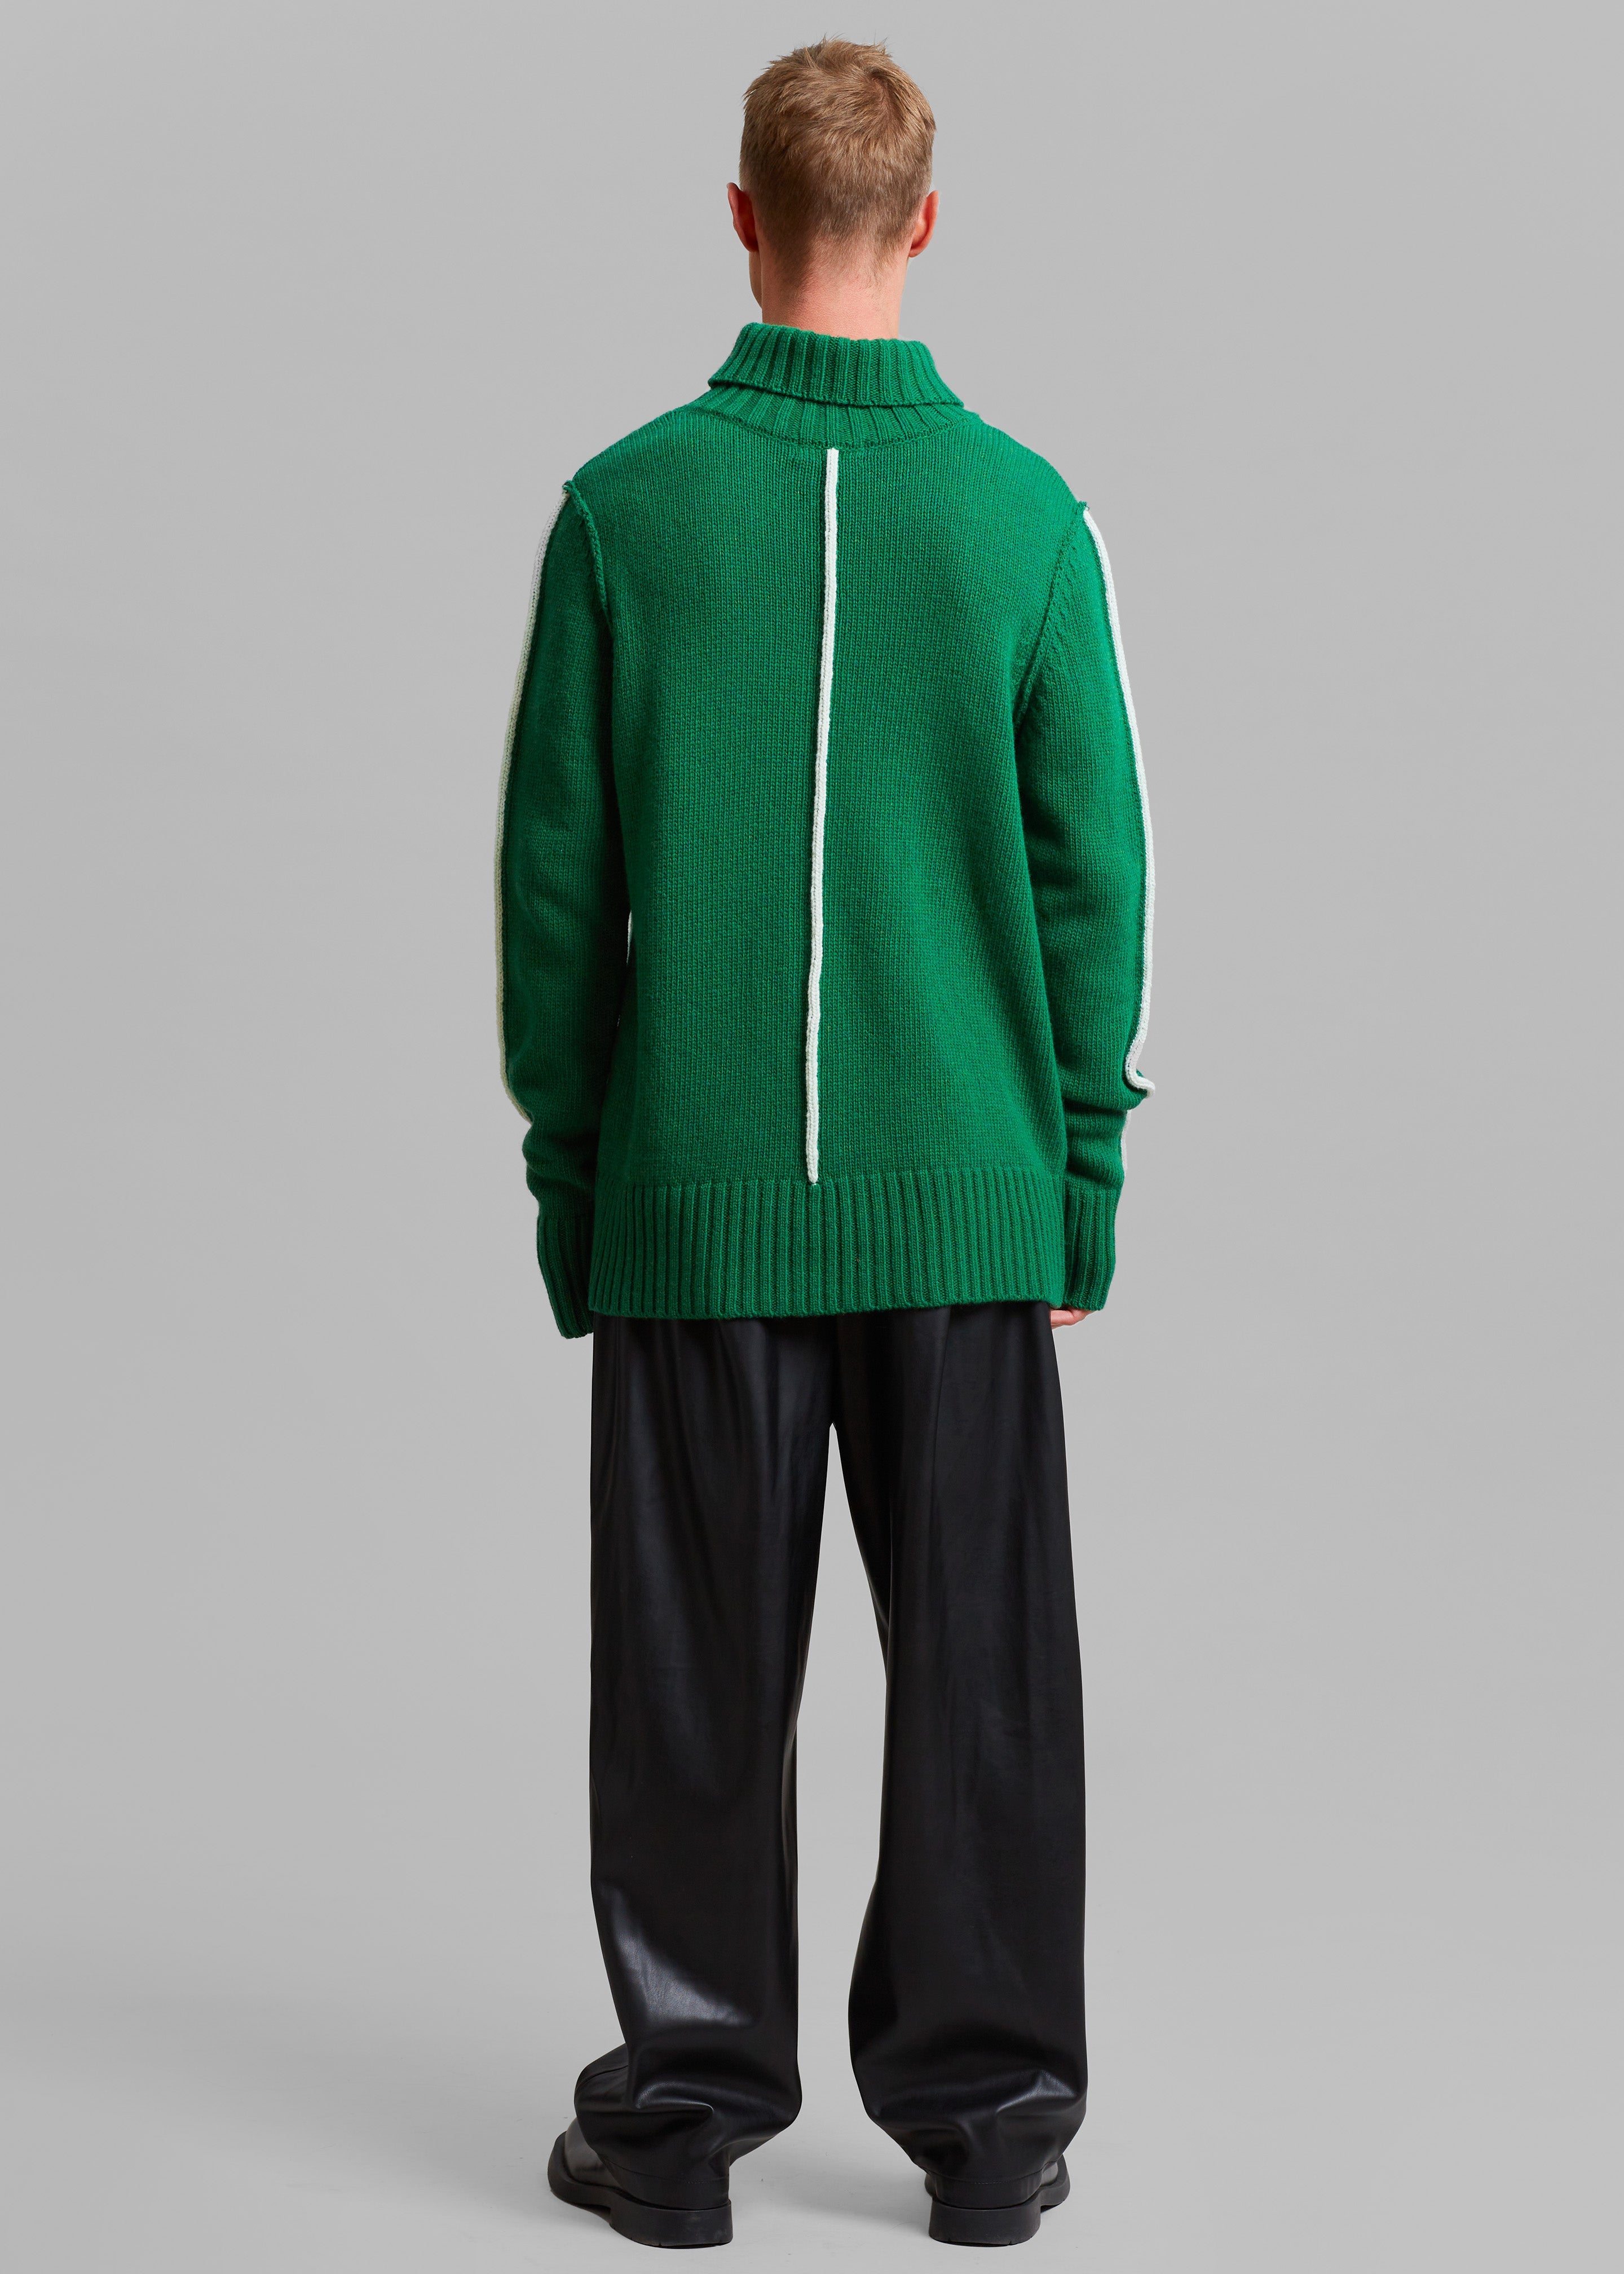 EGONLab Egonimati Turtleneck Sweater - Green Knit - 8